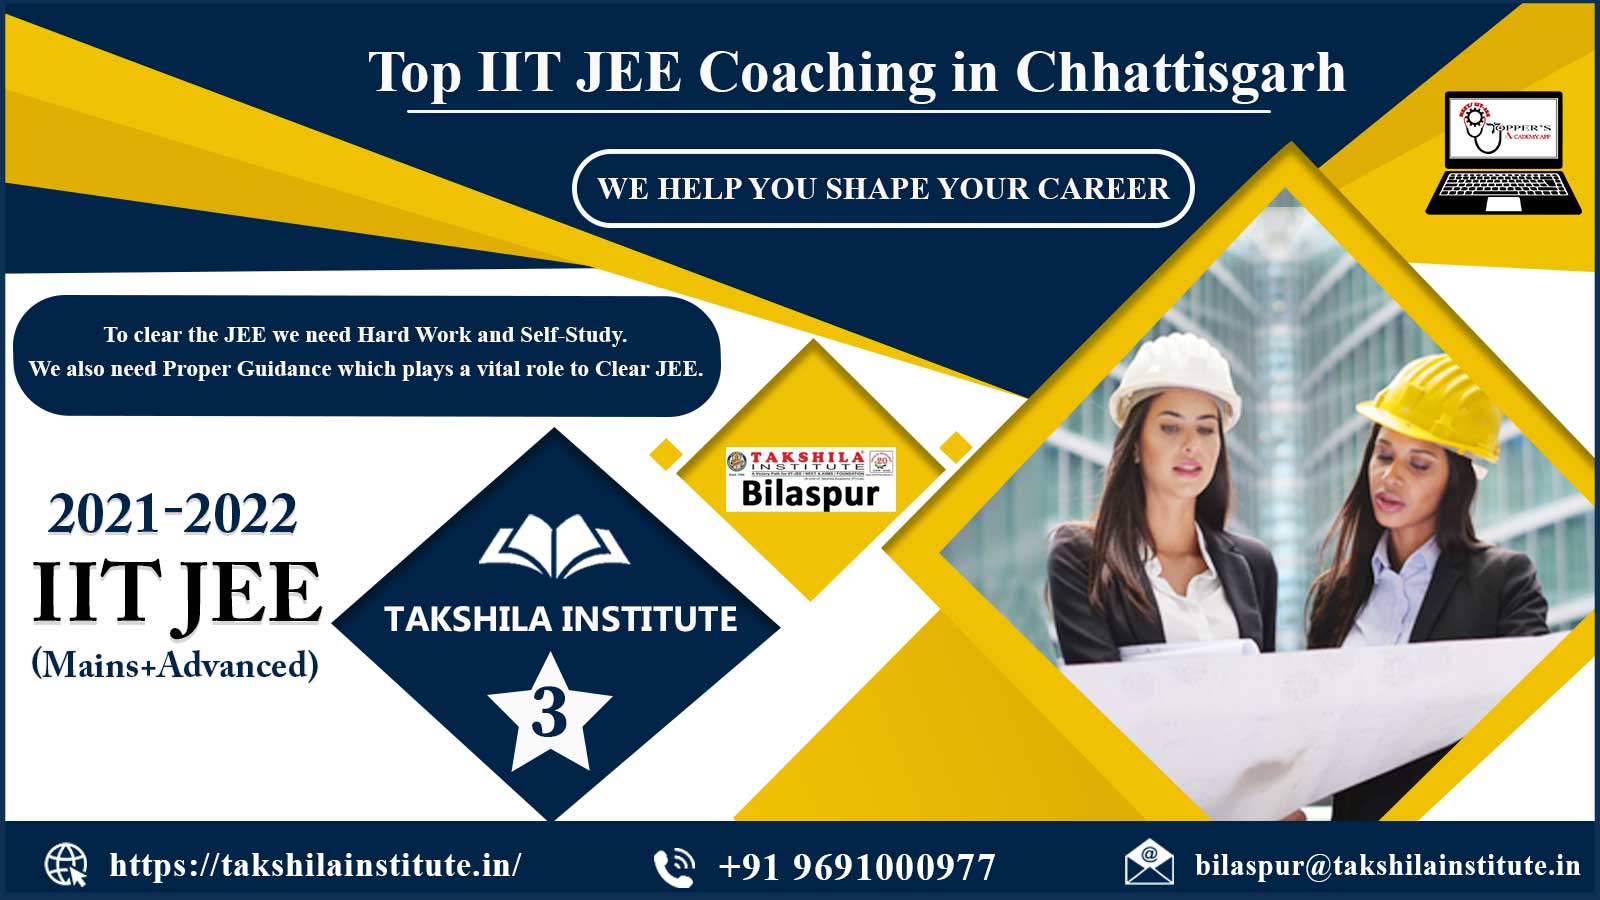 Takshila Institute Bilaspur IIT JEE Coaching in Chhattisgarh